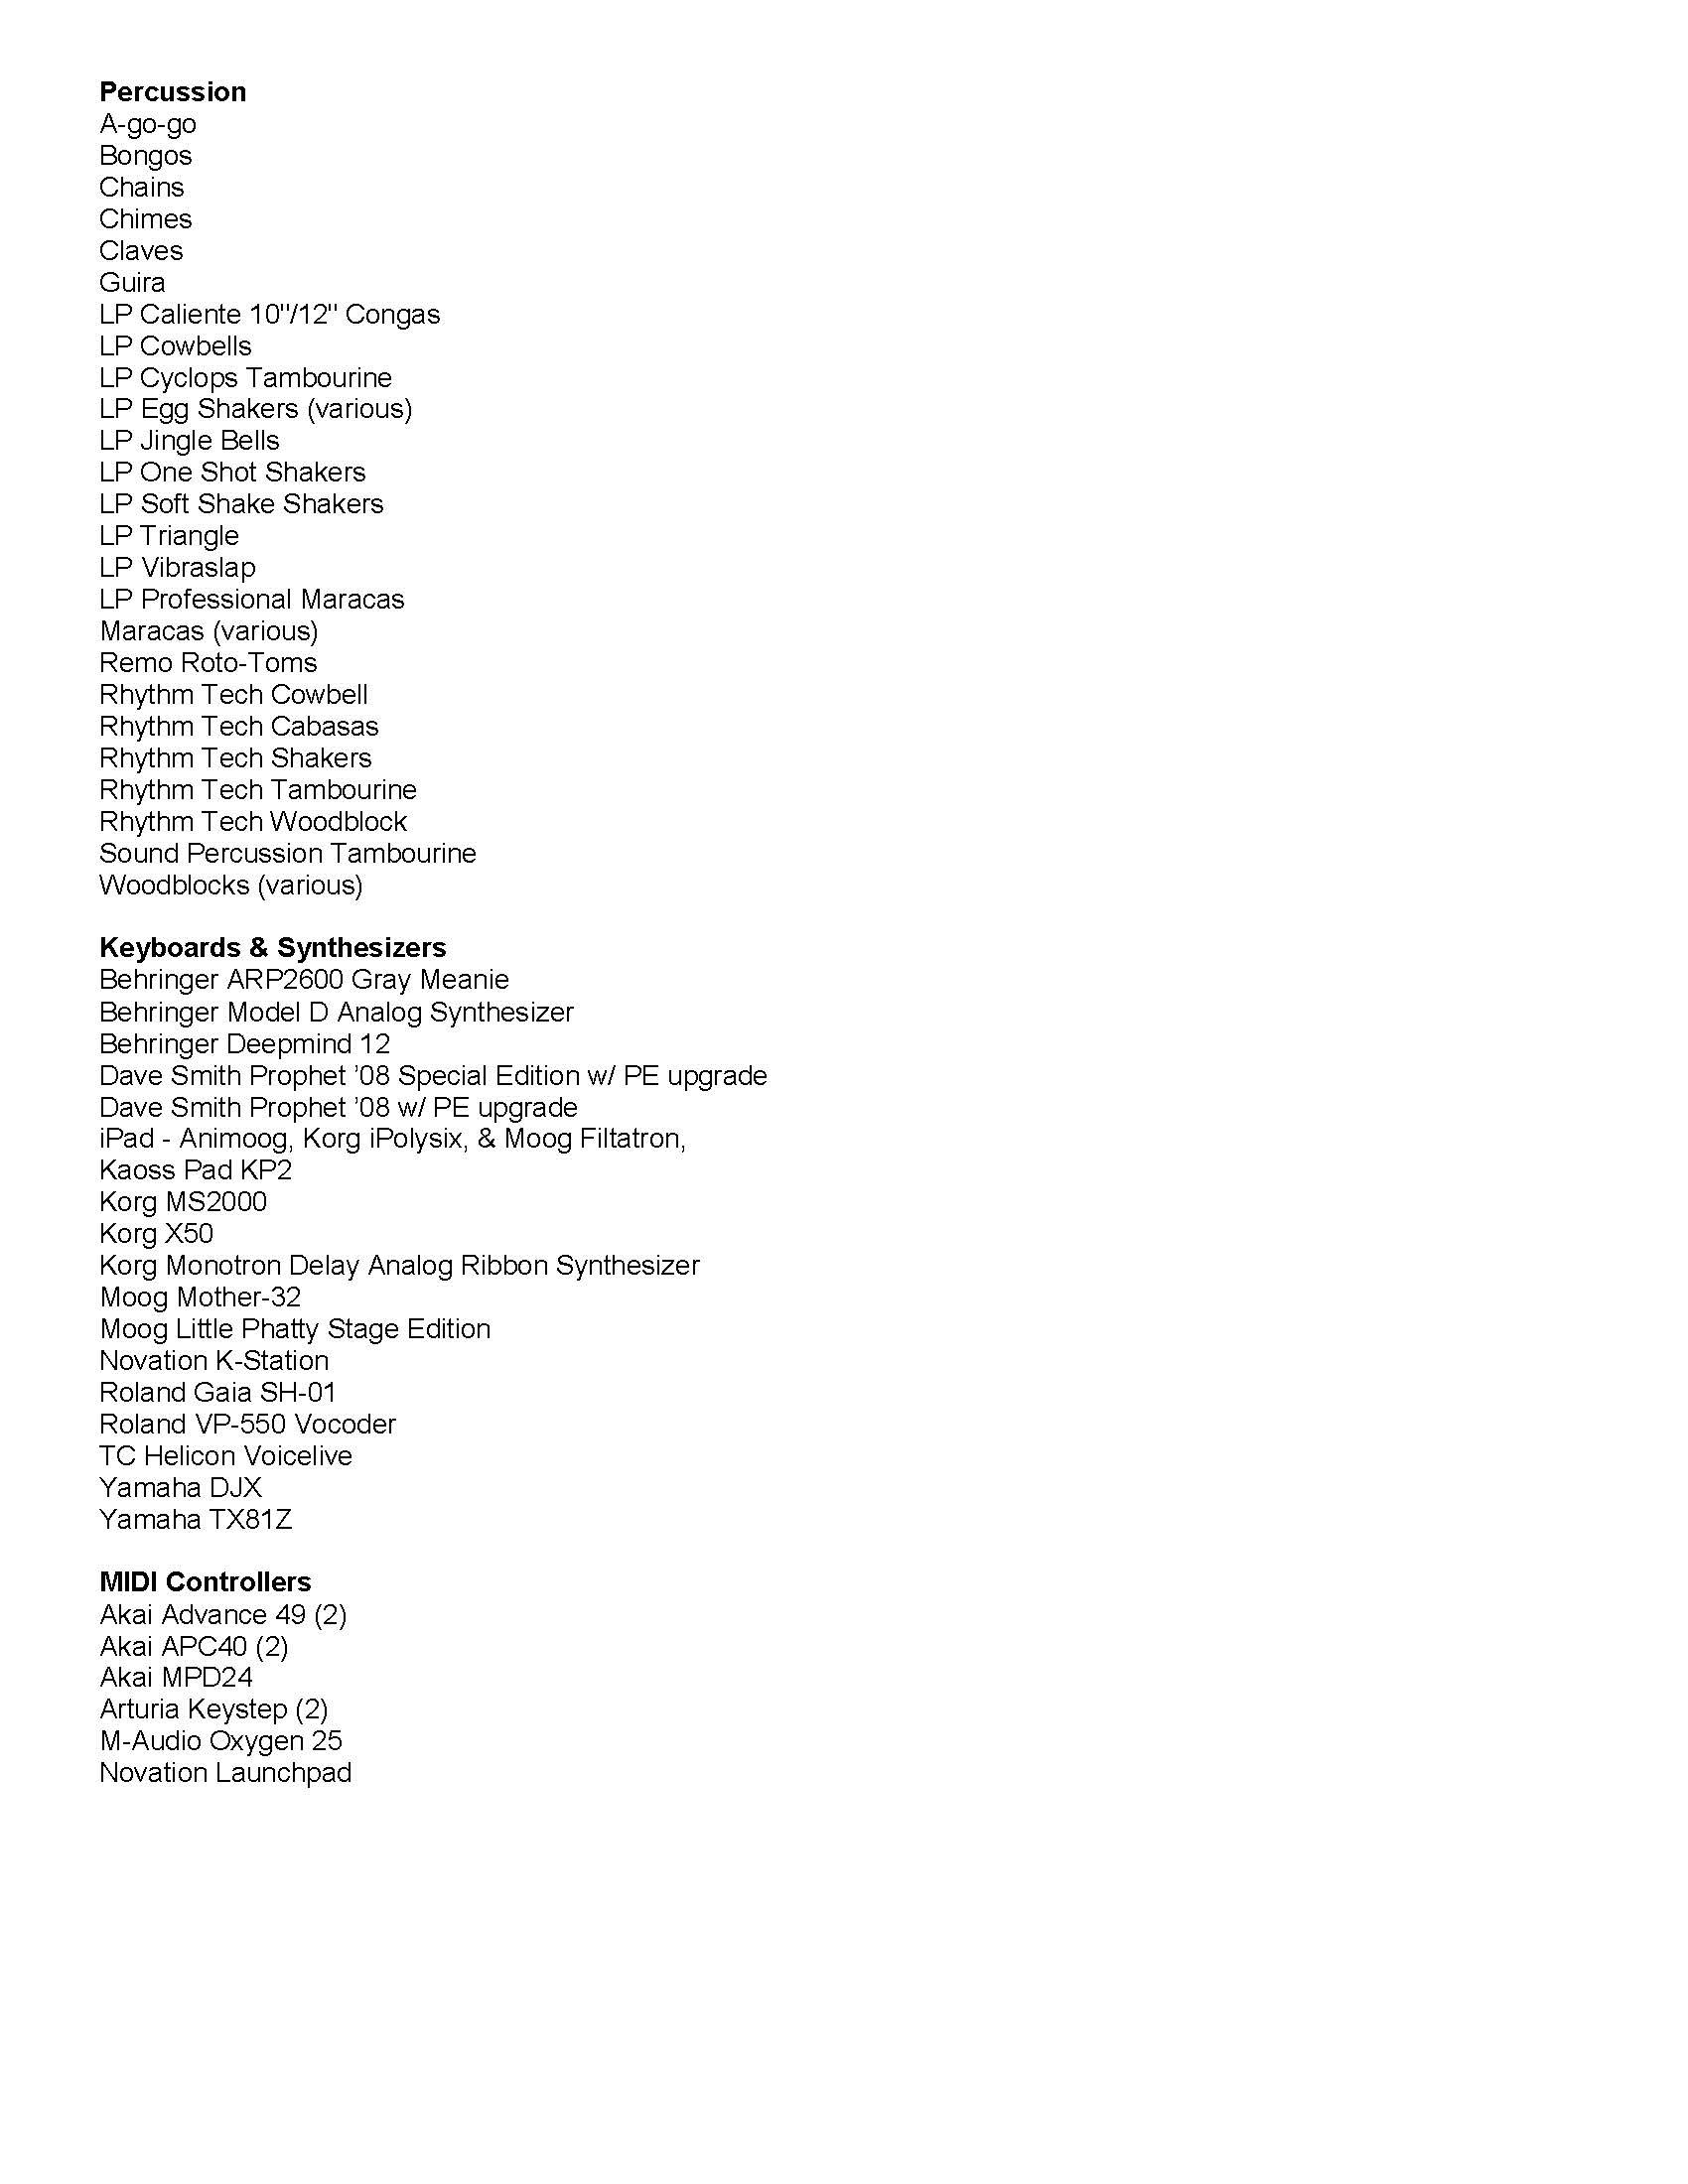 Clincal Sound Equipment List 12.21.22_Page_4.jpg